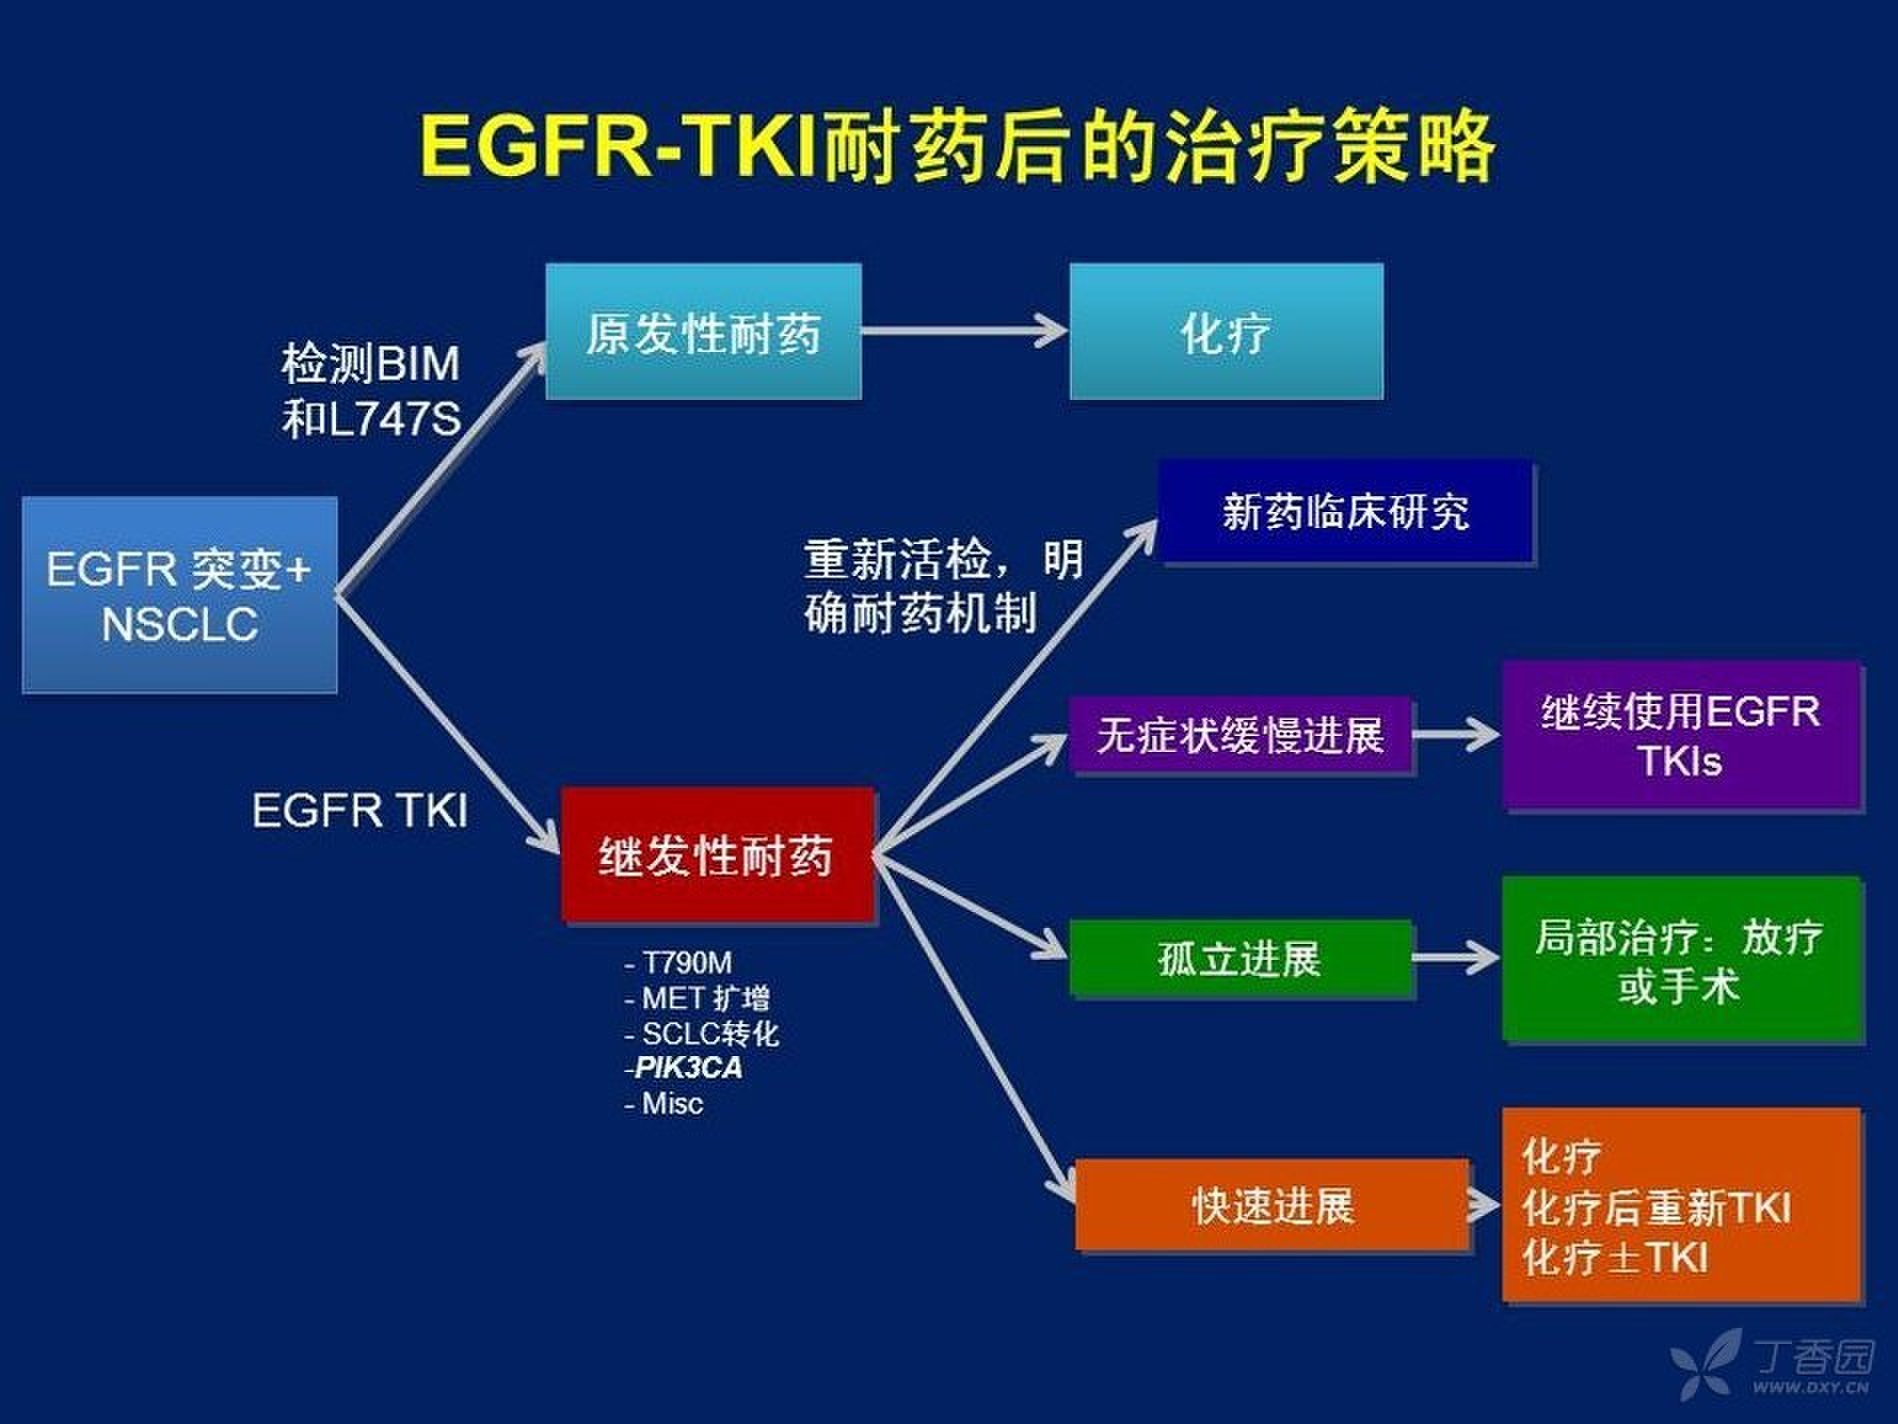 EGFR TKI.jpg